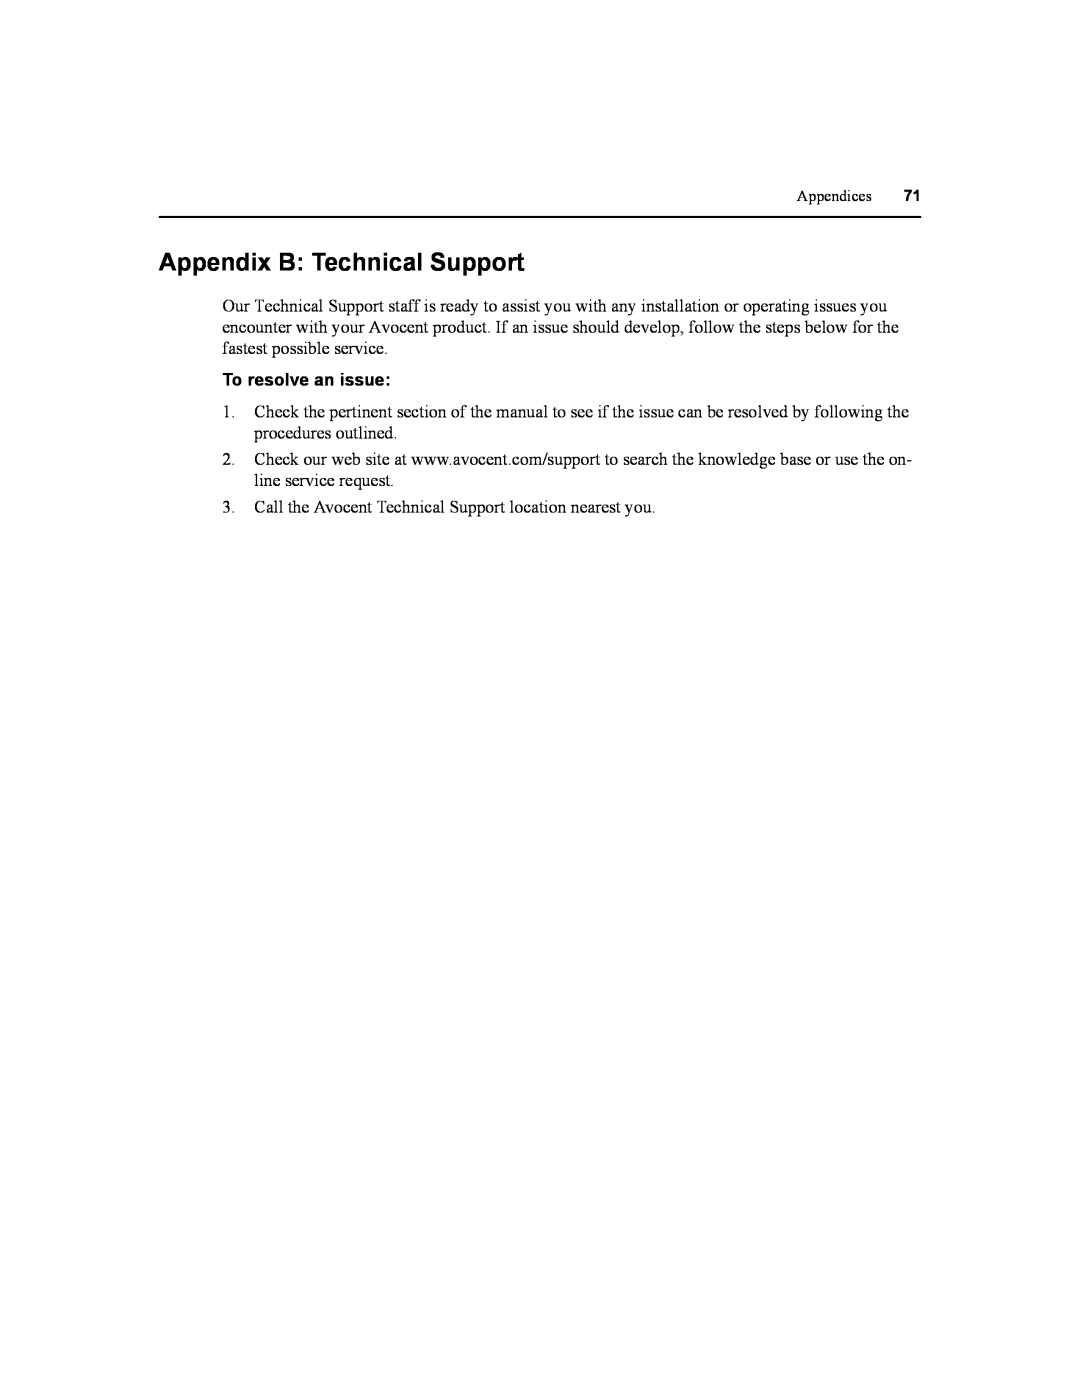 Daxten DSR1020, DSR2020, DSR4020, DSR8020 manual Appendix B Technical Support, To resolve an issue 